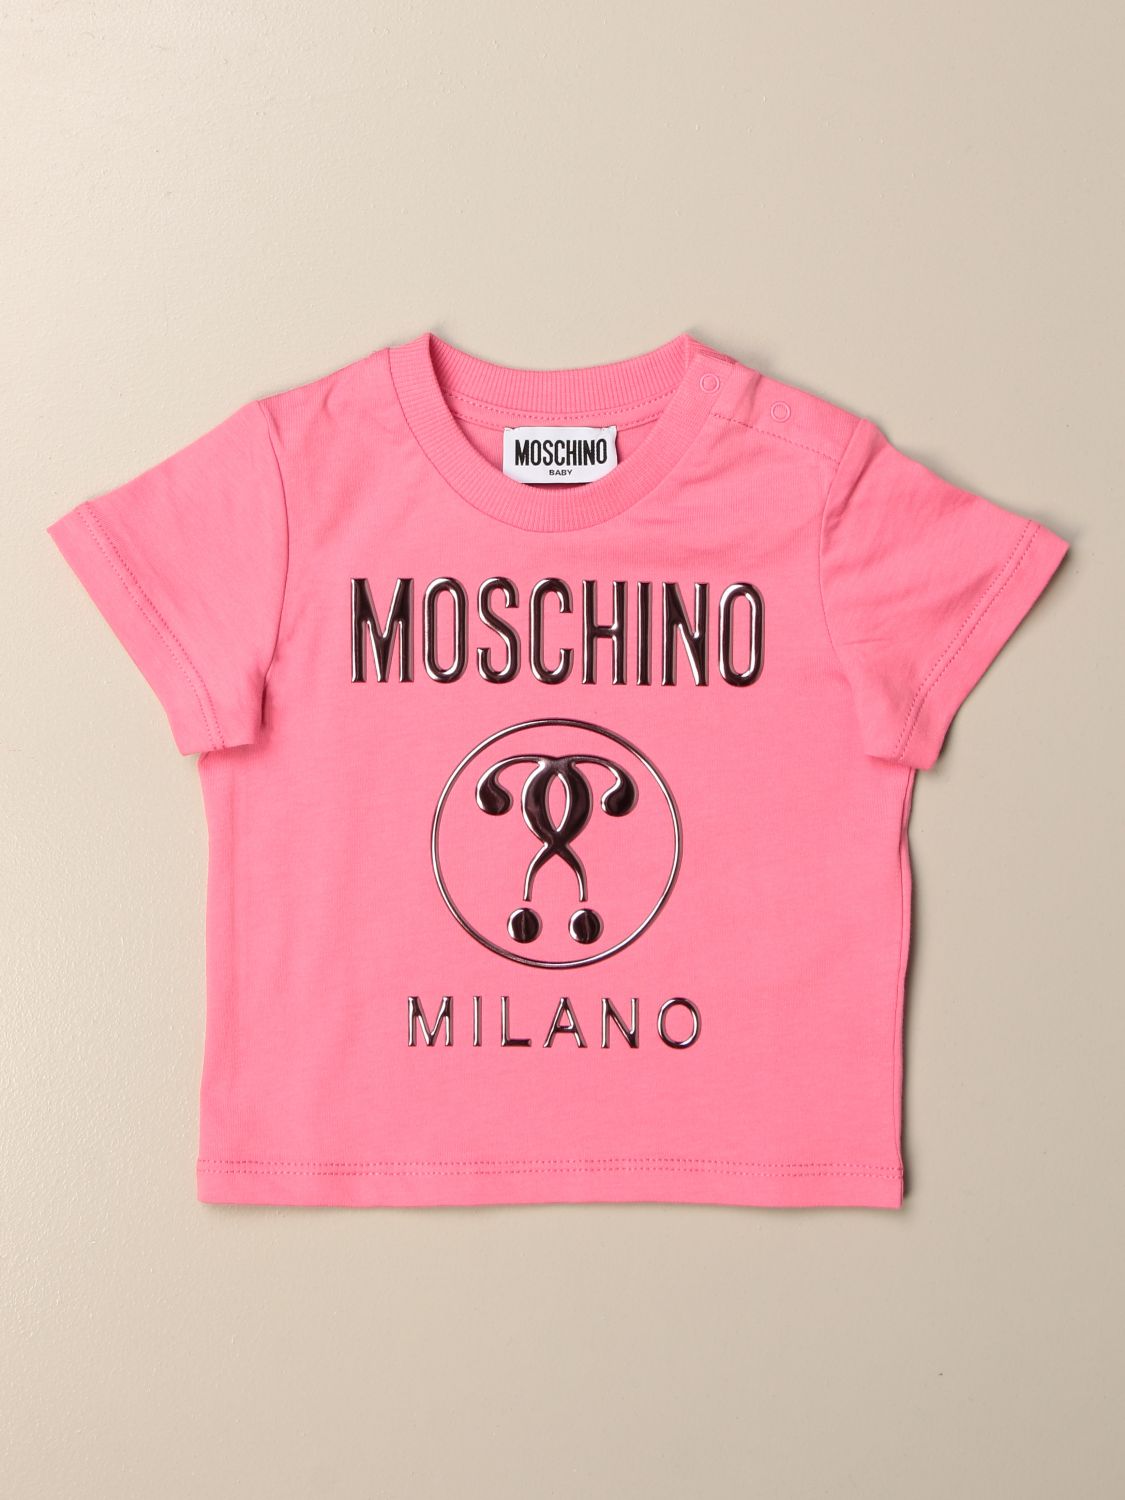 moschino colorful shirt